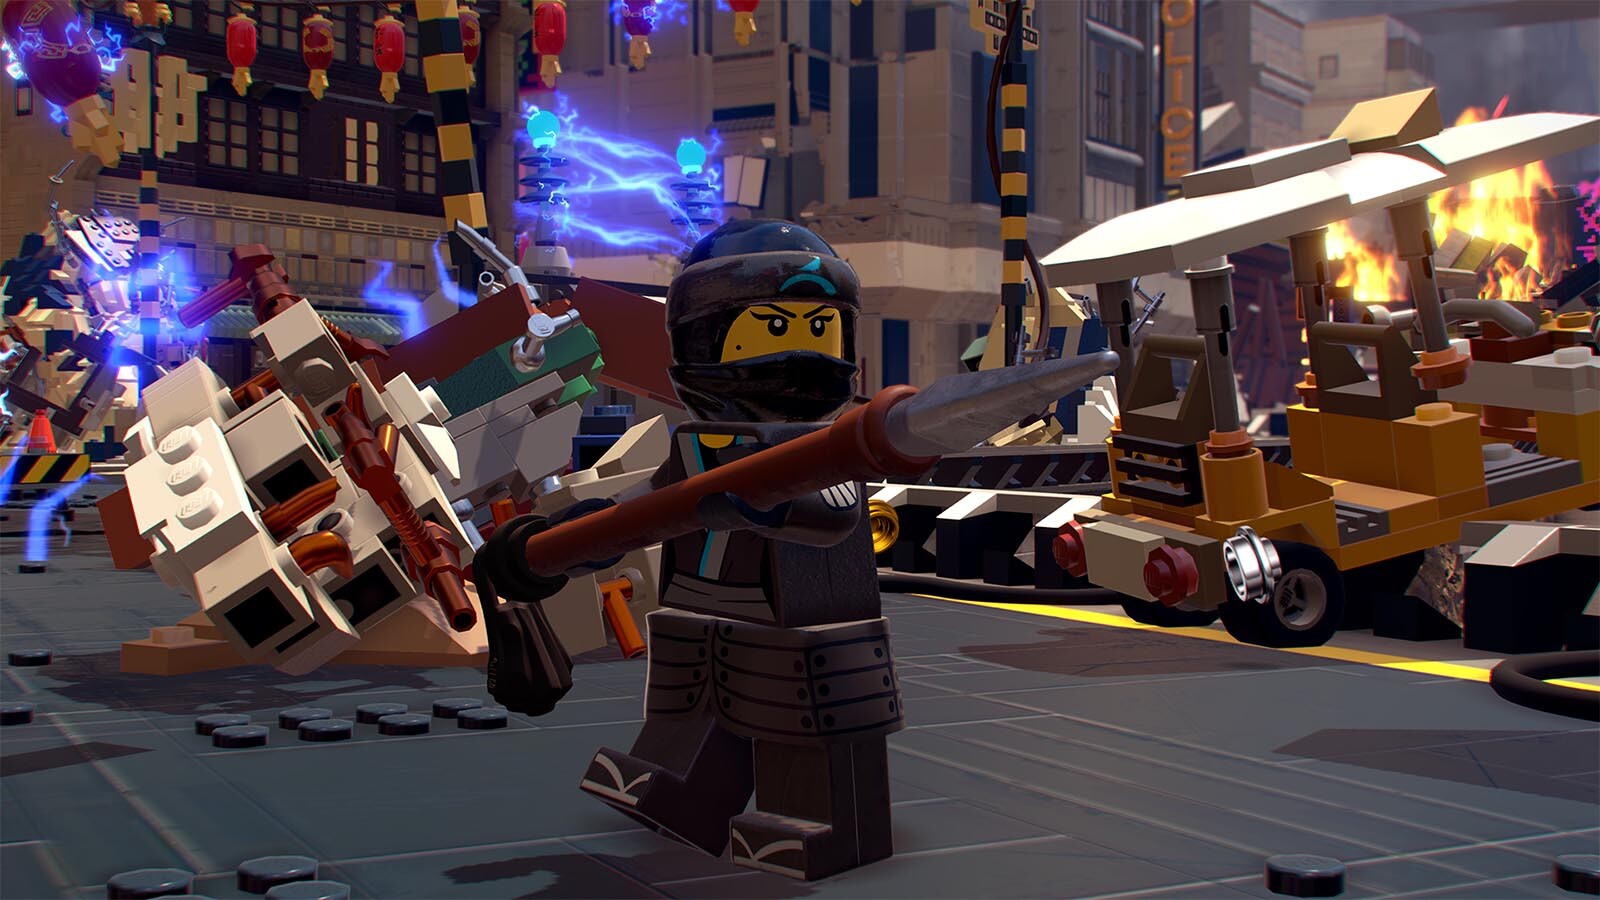 hage tro Udfyld The LEGO Ninjago Movie Videogame Steam Key for PC - Buy now